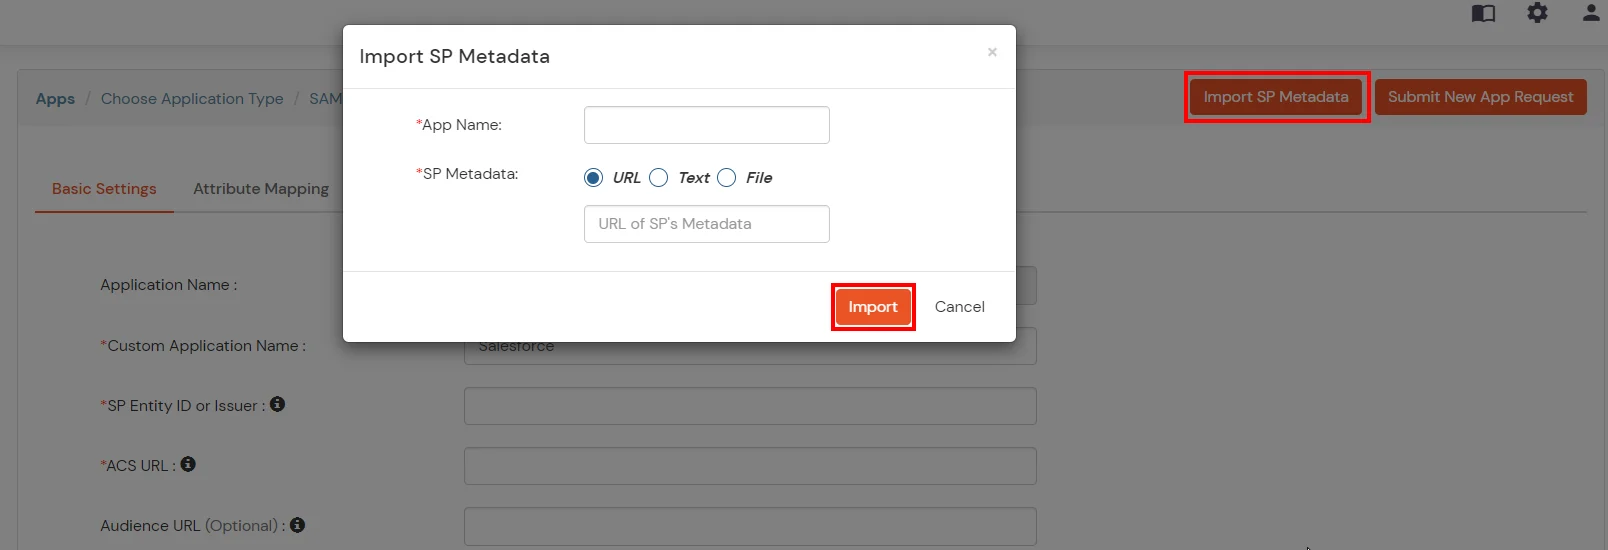 Lusha Single Sign-On (SSO) Single Sign-On (SSO) Upload SP Metadata File in miniOrange Dashboard